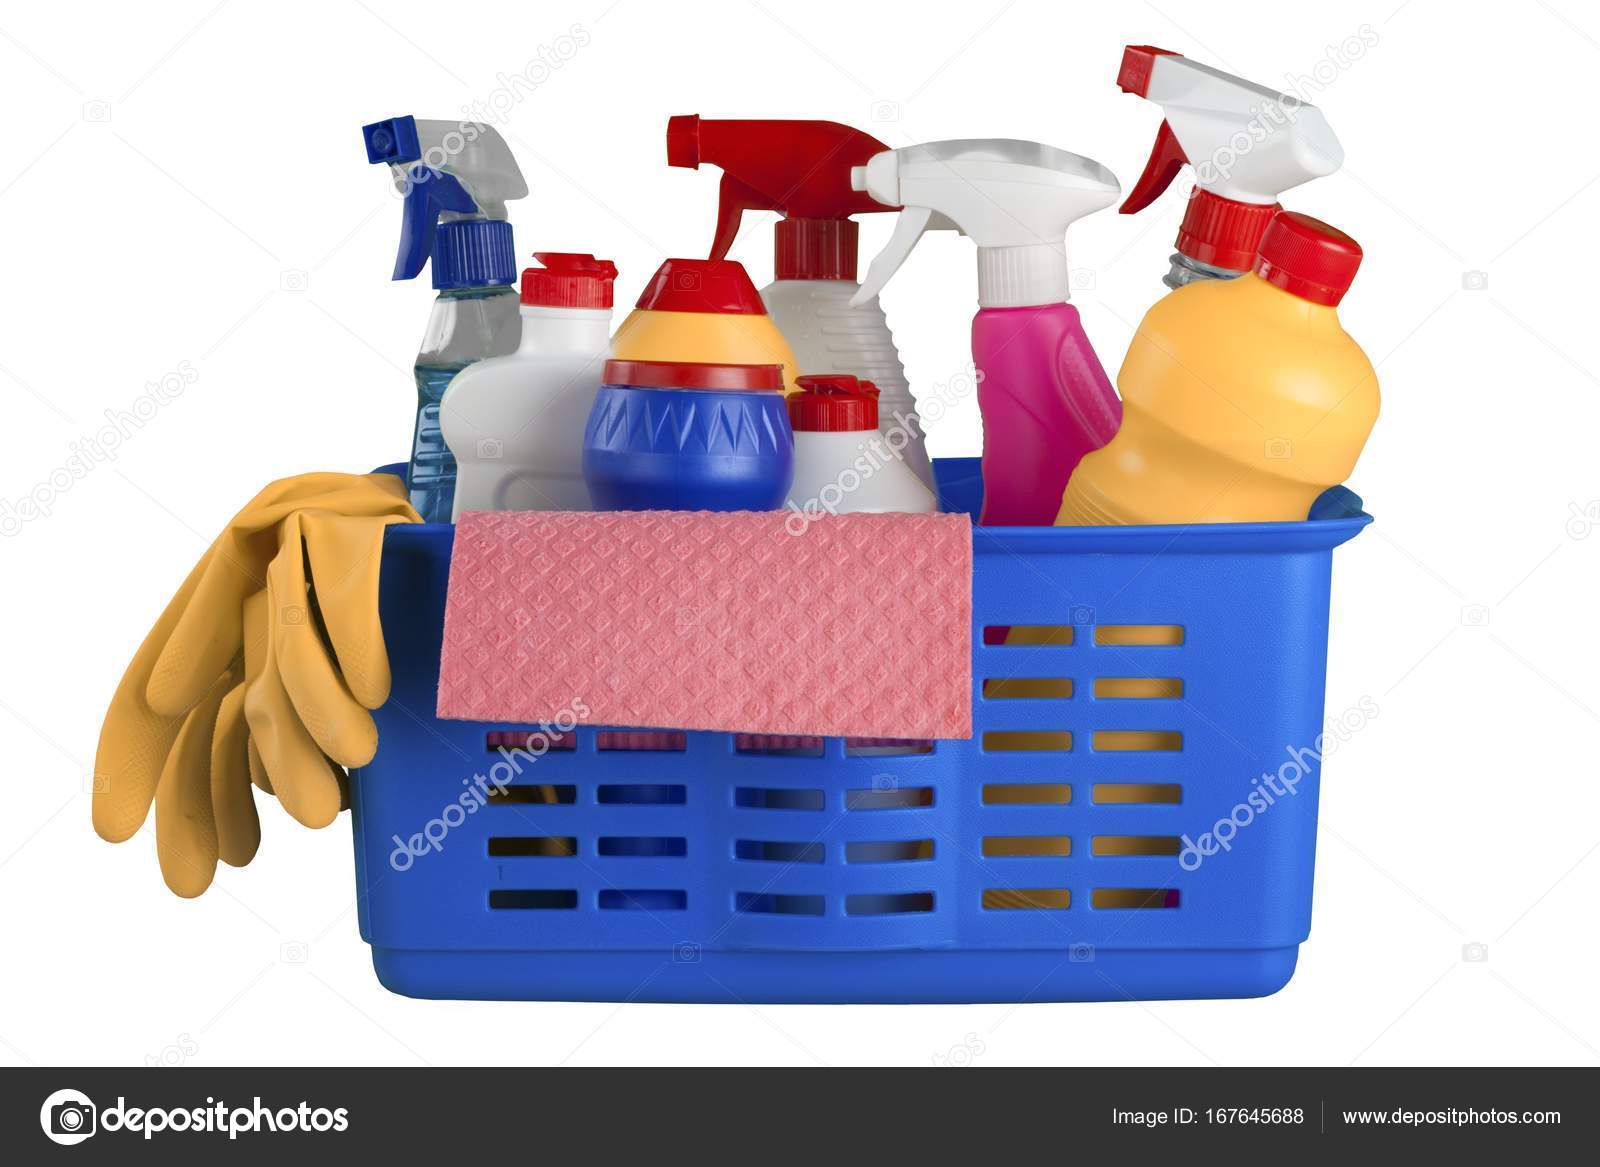 https://st3.depositphotos.com/4431055/16764/i/1600/depositphotos_167645688-stock-photo-cleaning-supplies-basket-isolated-white.jpg